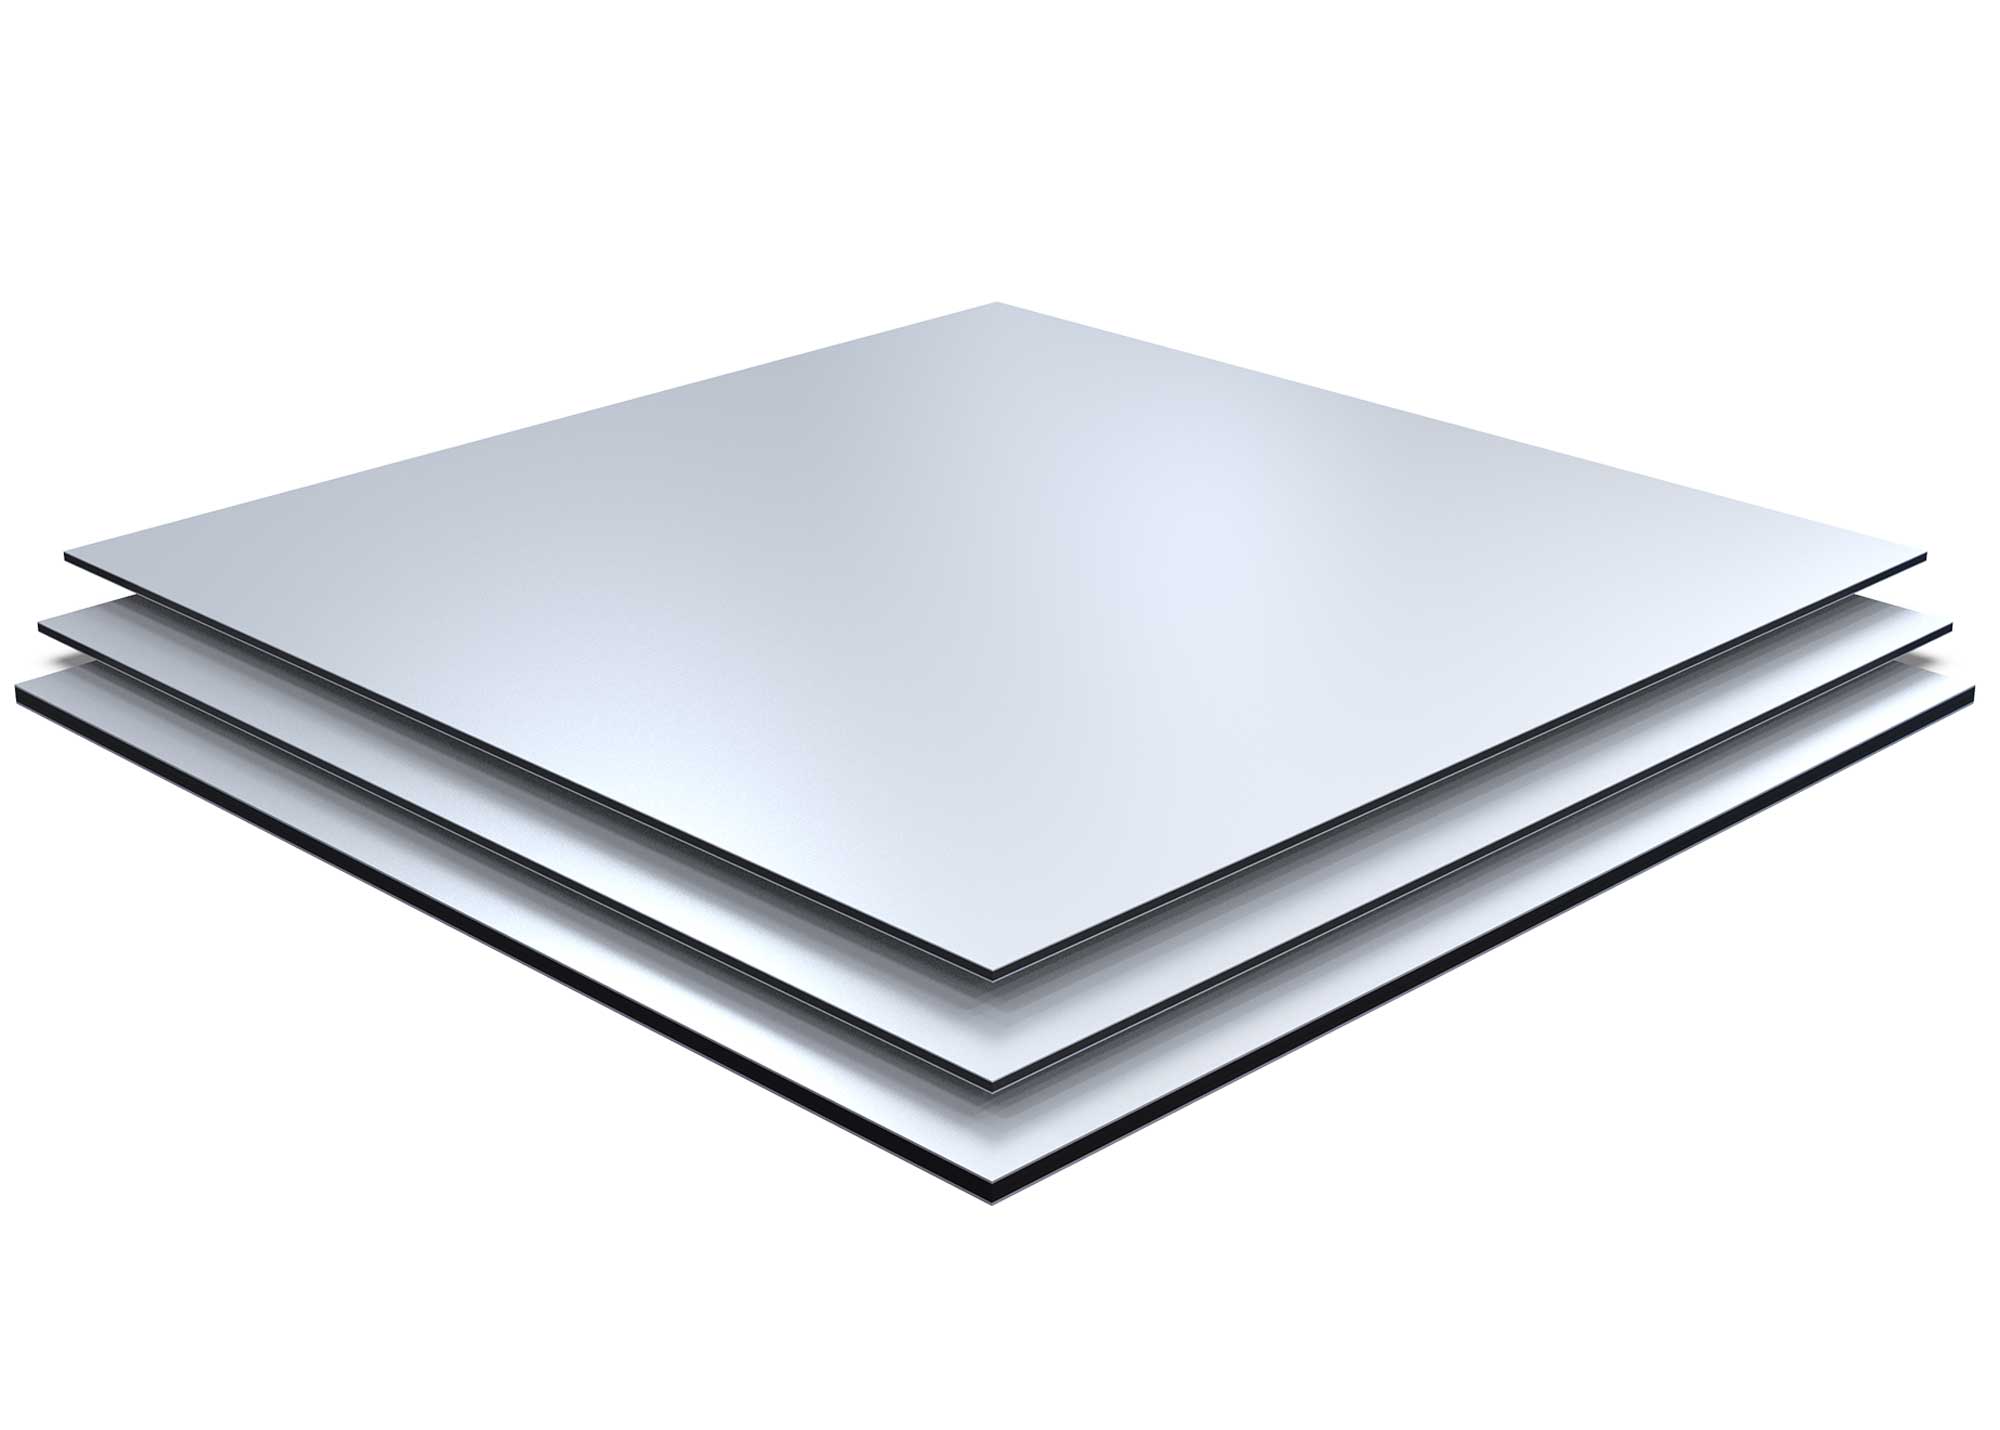 How to Prepare Aluminum Composite Material (ACM) for Painting